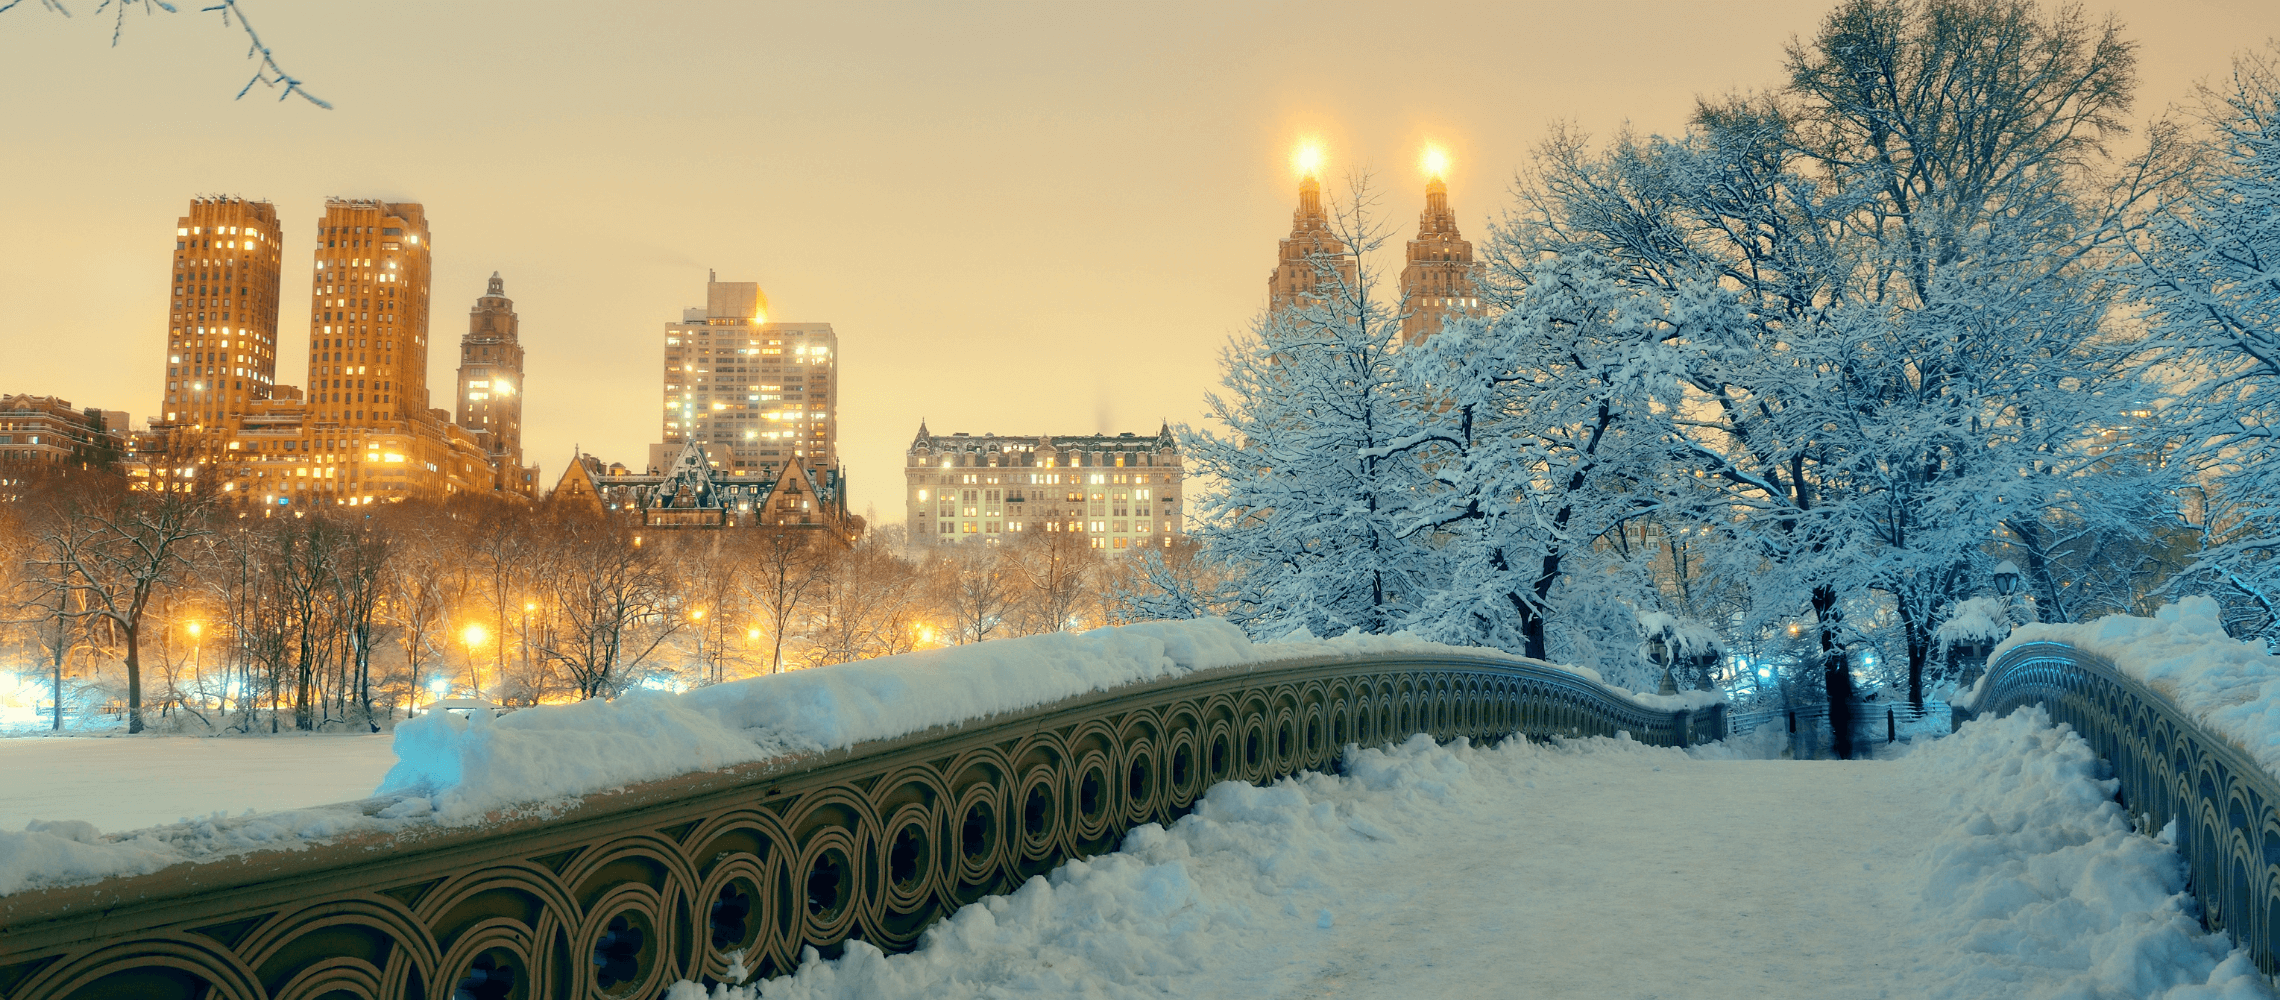 Snowy bridge in Central Park